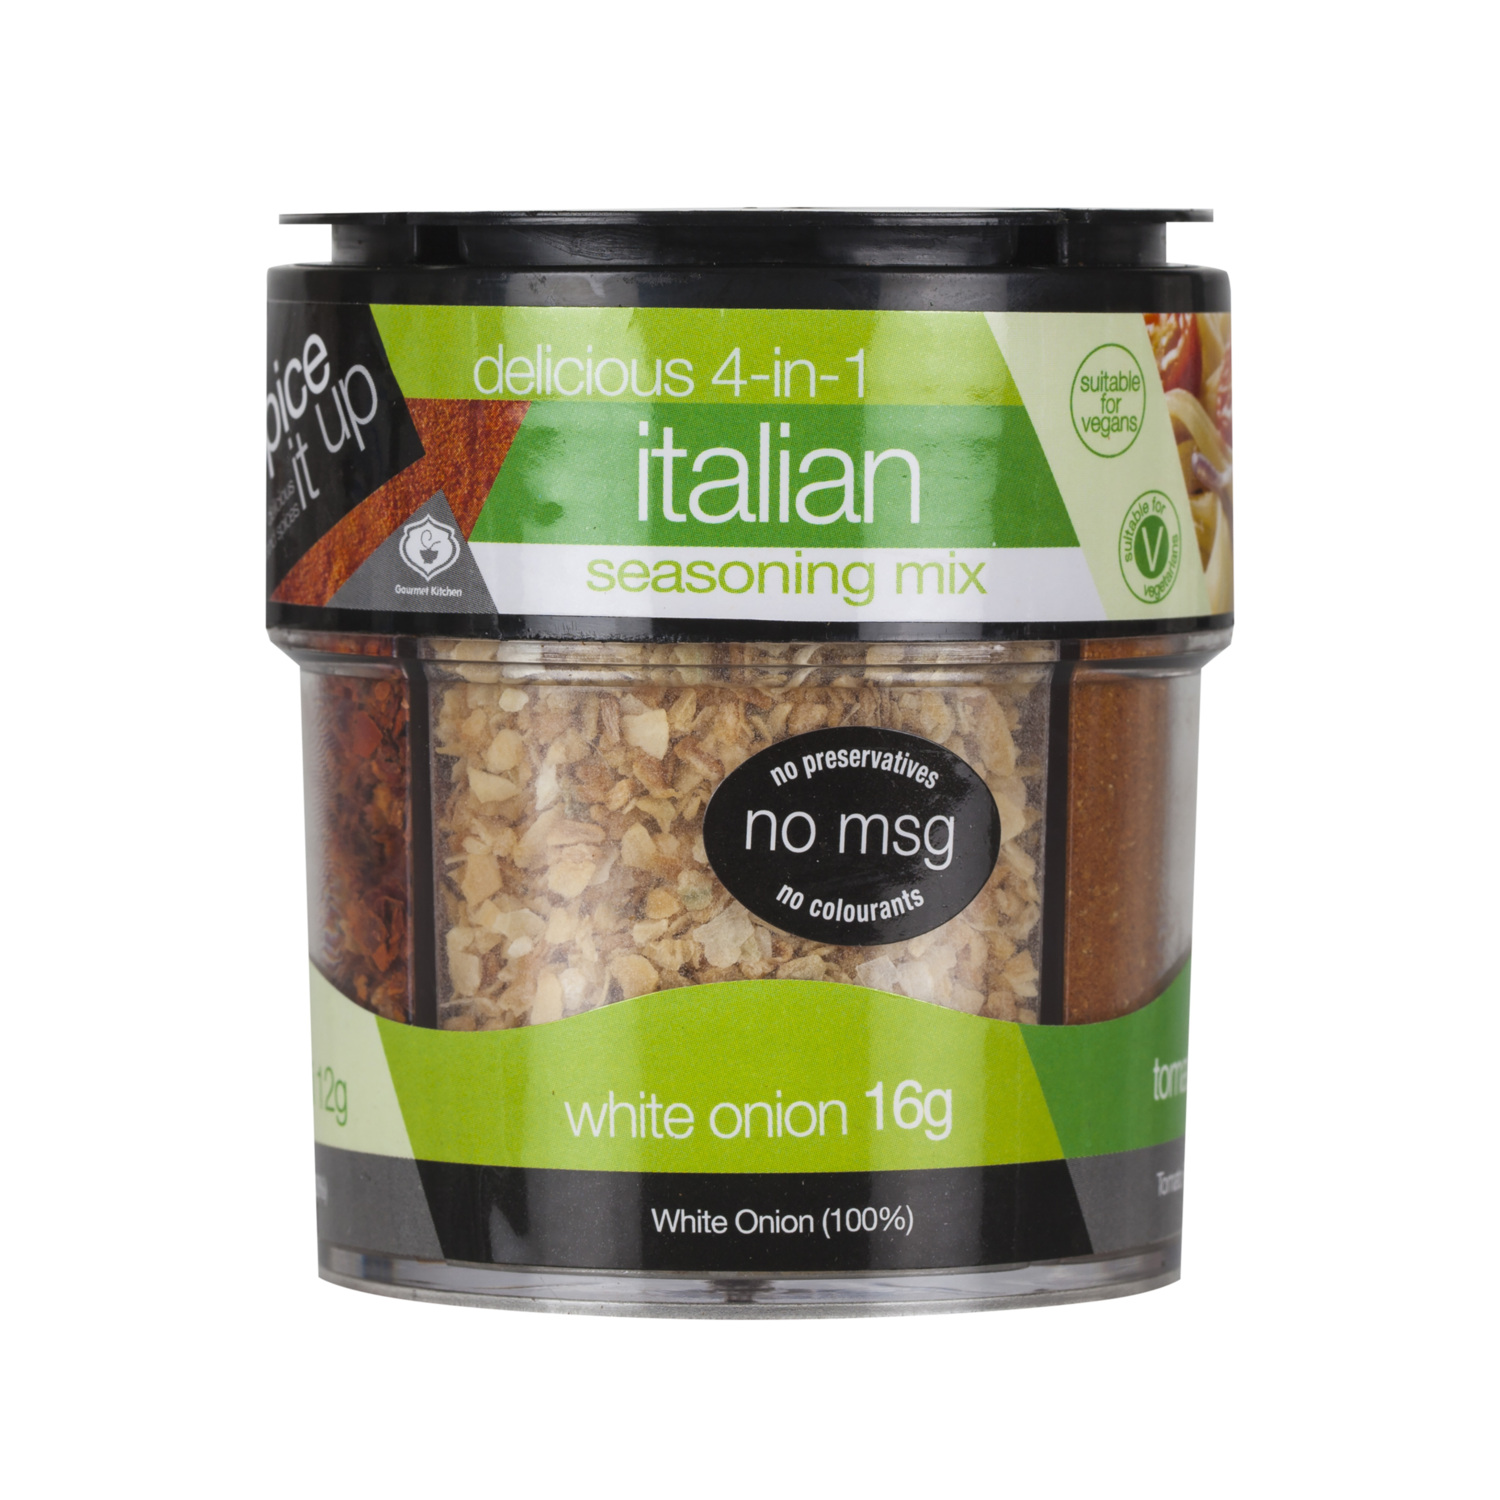 4 in 1 Italian Seasoning Mix Image 1